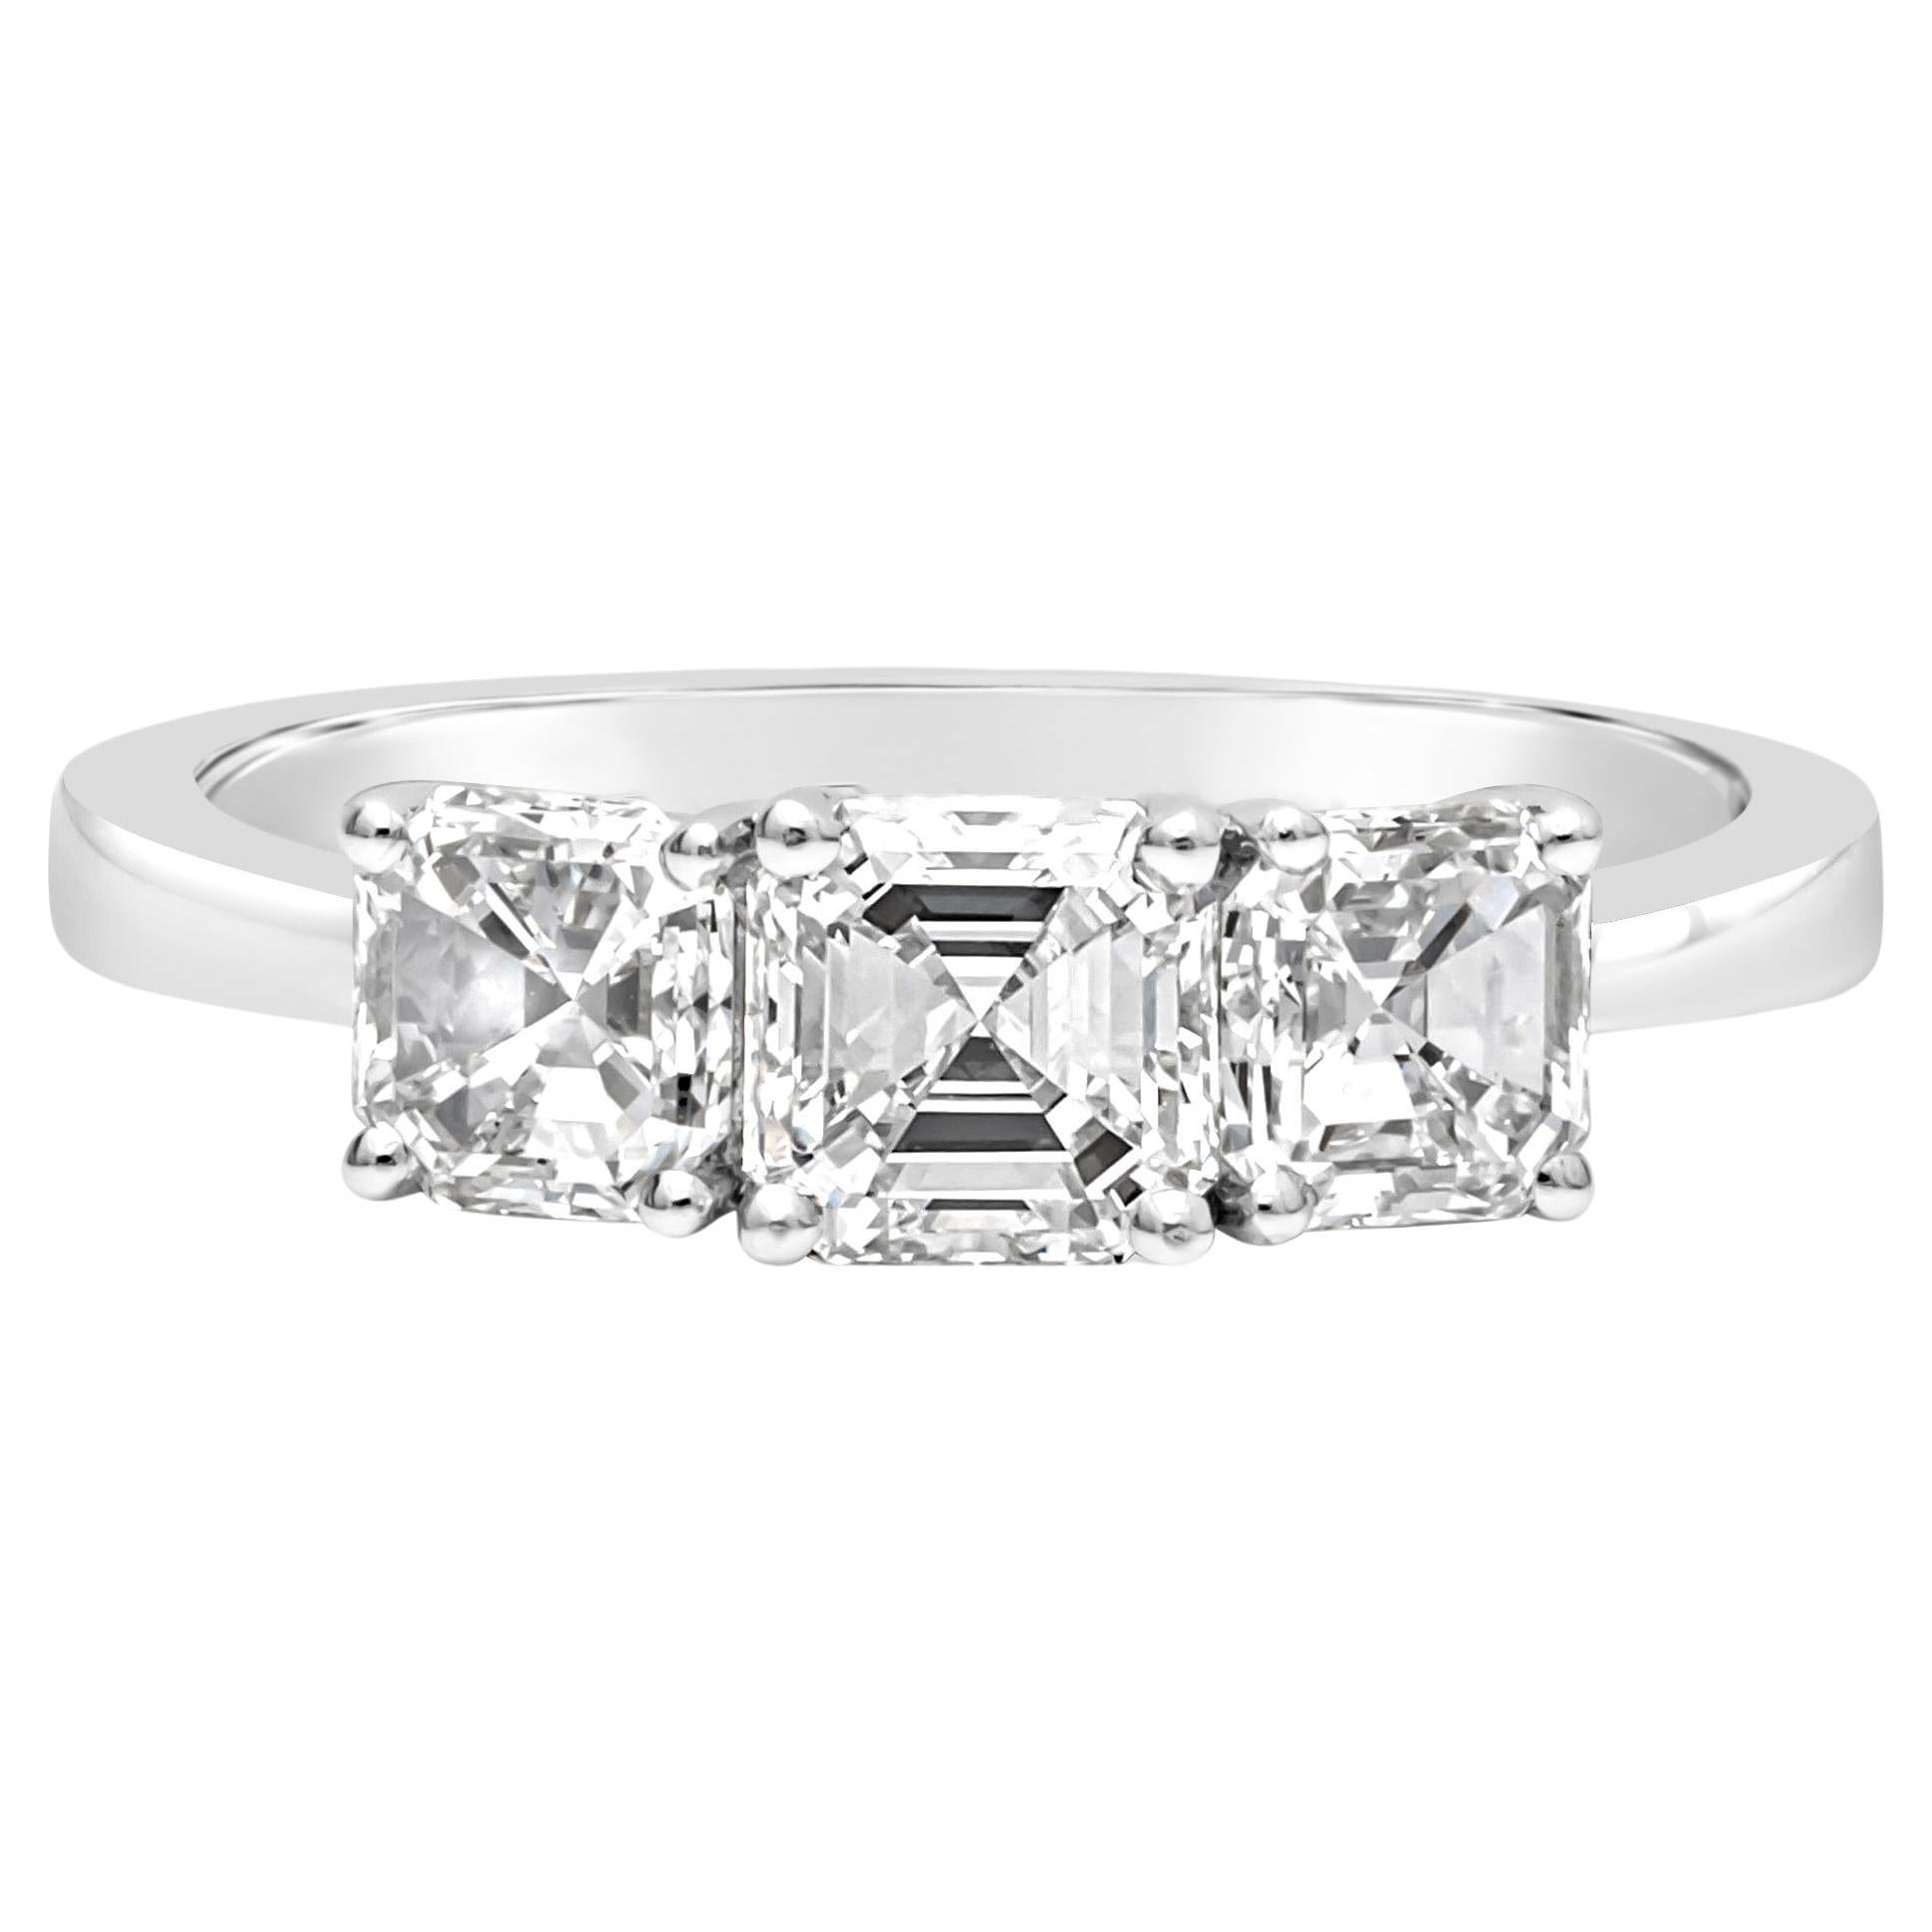 Roman Malakov 1.79 Carats Total Asscher Cut Diamond Three-Stone Engagement Ring